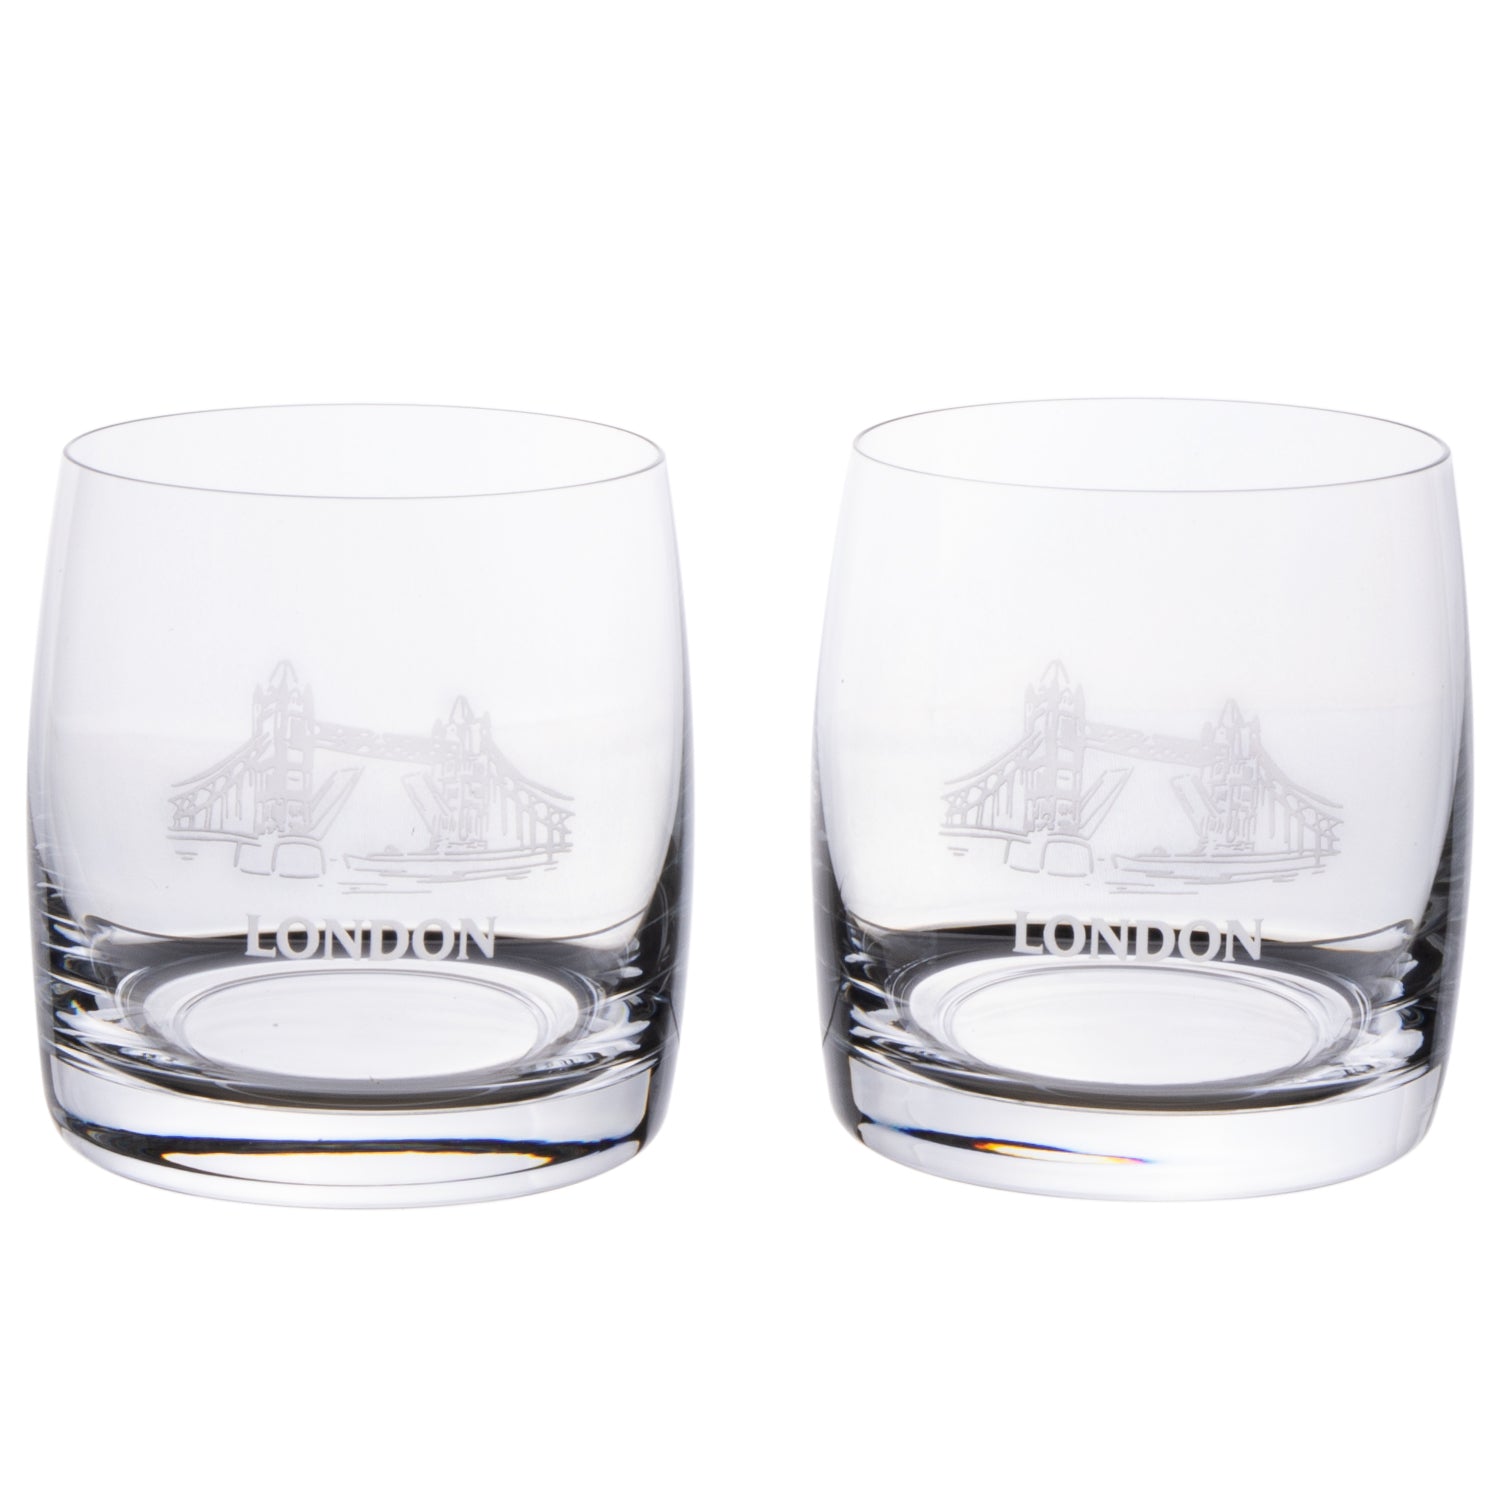 Tower Bridge Whisky Glasses Boxed Set